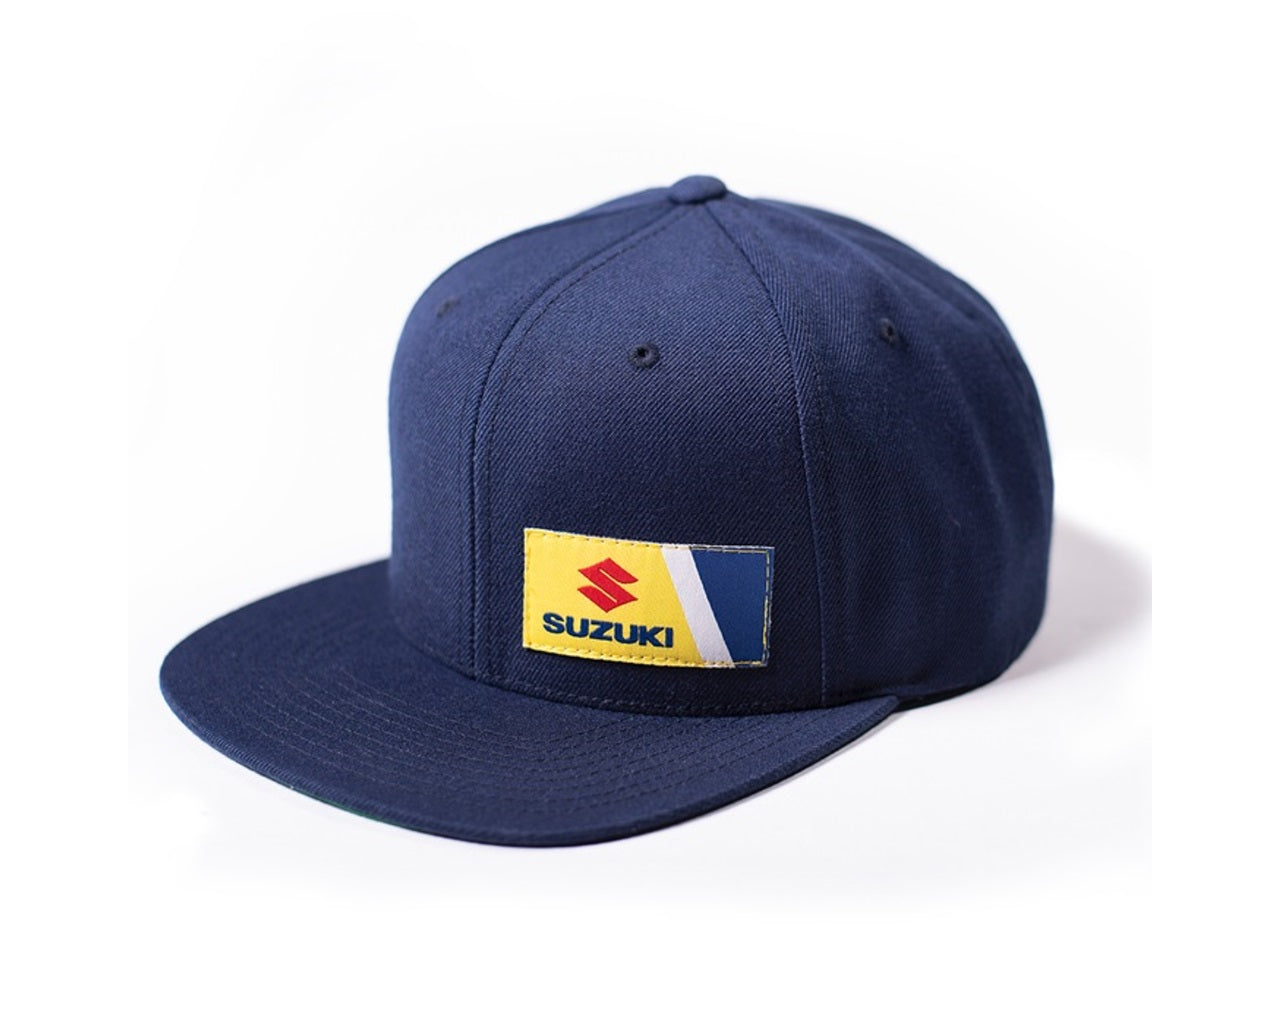 Suzuki Wedge Baseball Cap - Navy Blue Snap-Back 990A0-17192